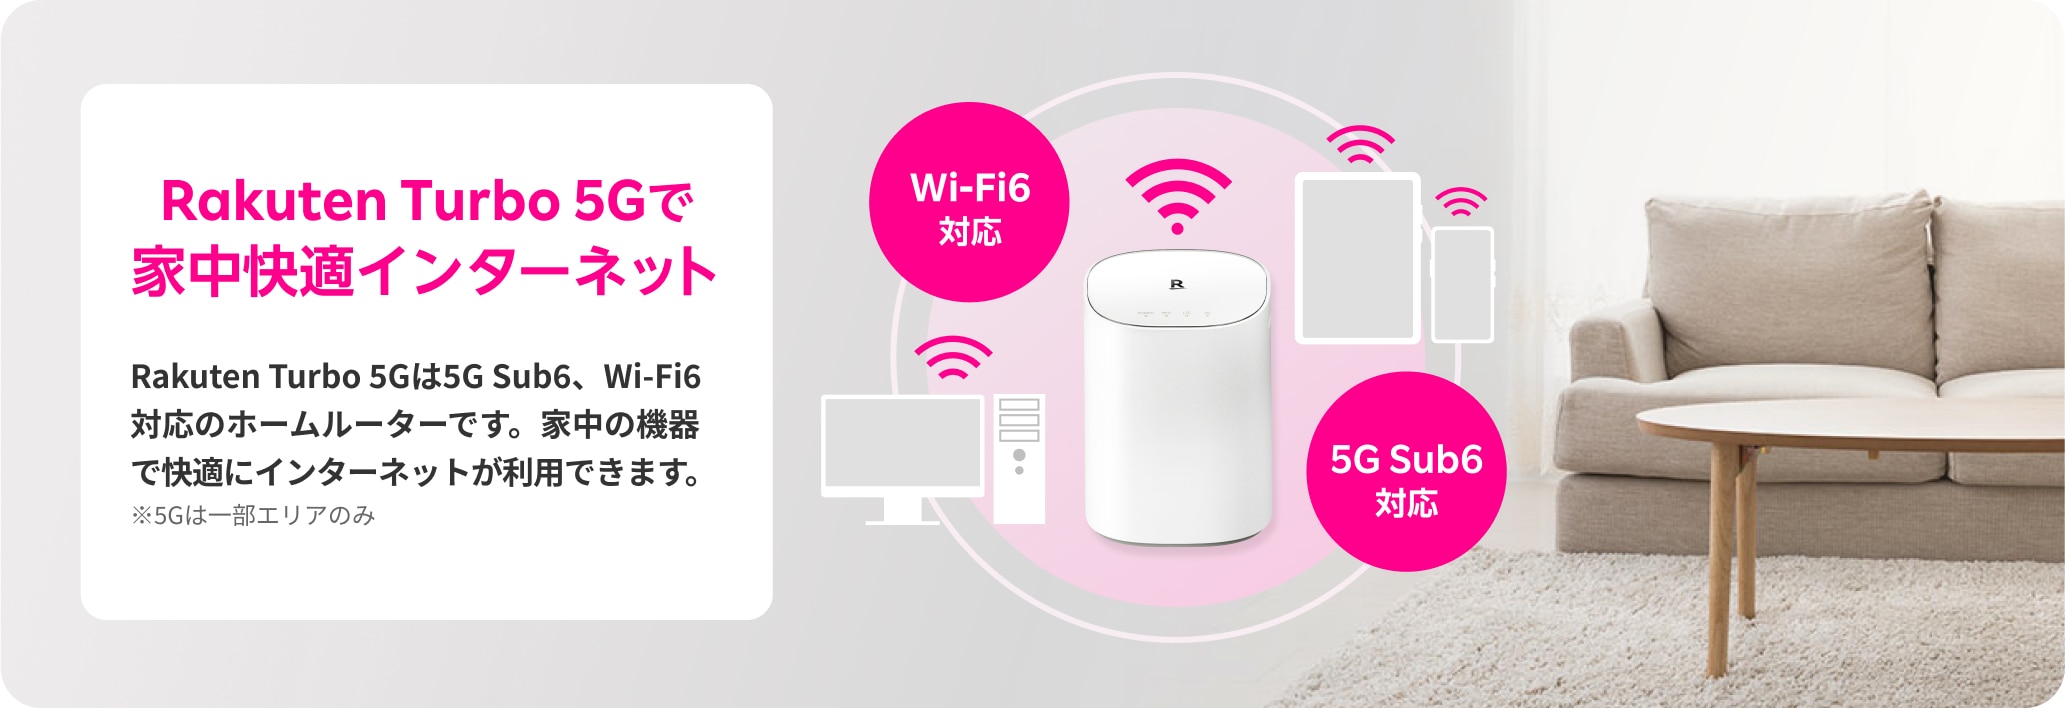 Rakuten Turbo 5Gは5G Sub6、Wi-Fi6対応のホームルーターです。家中の機器で快適にインターネットが利用できます。※5Gは一部エリアのみ